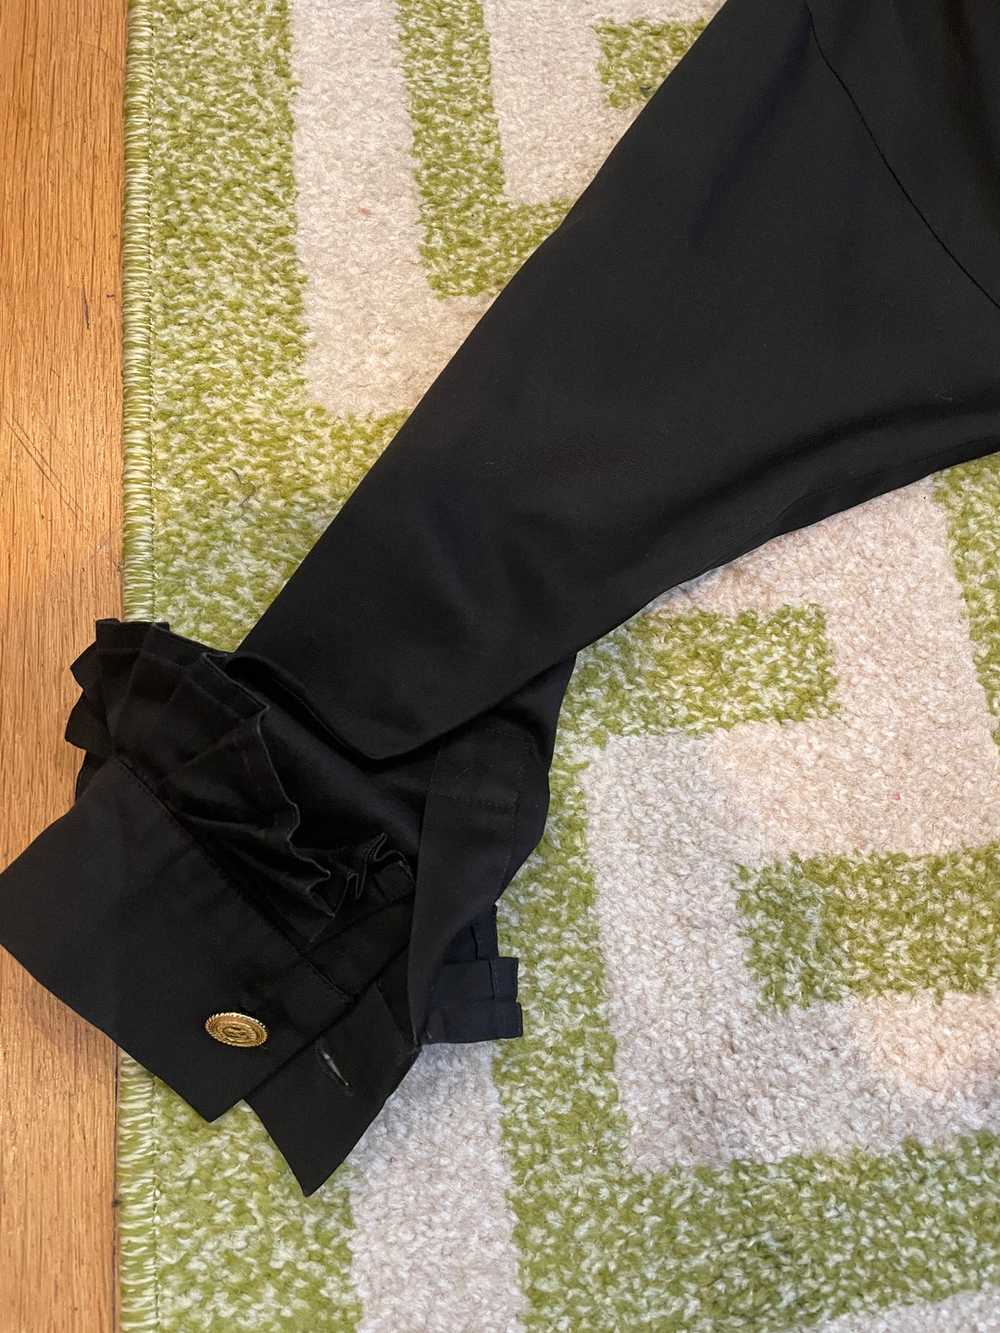 Chanel Black Cotton Dress (Size 4) - image 10